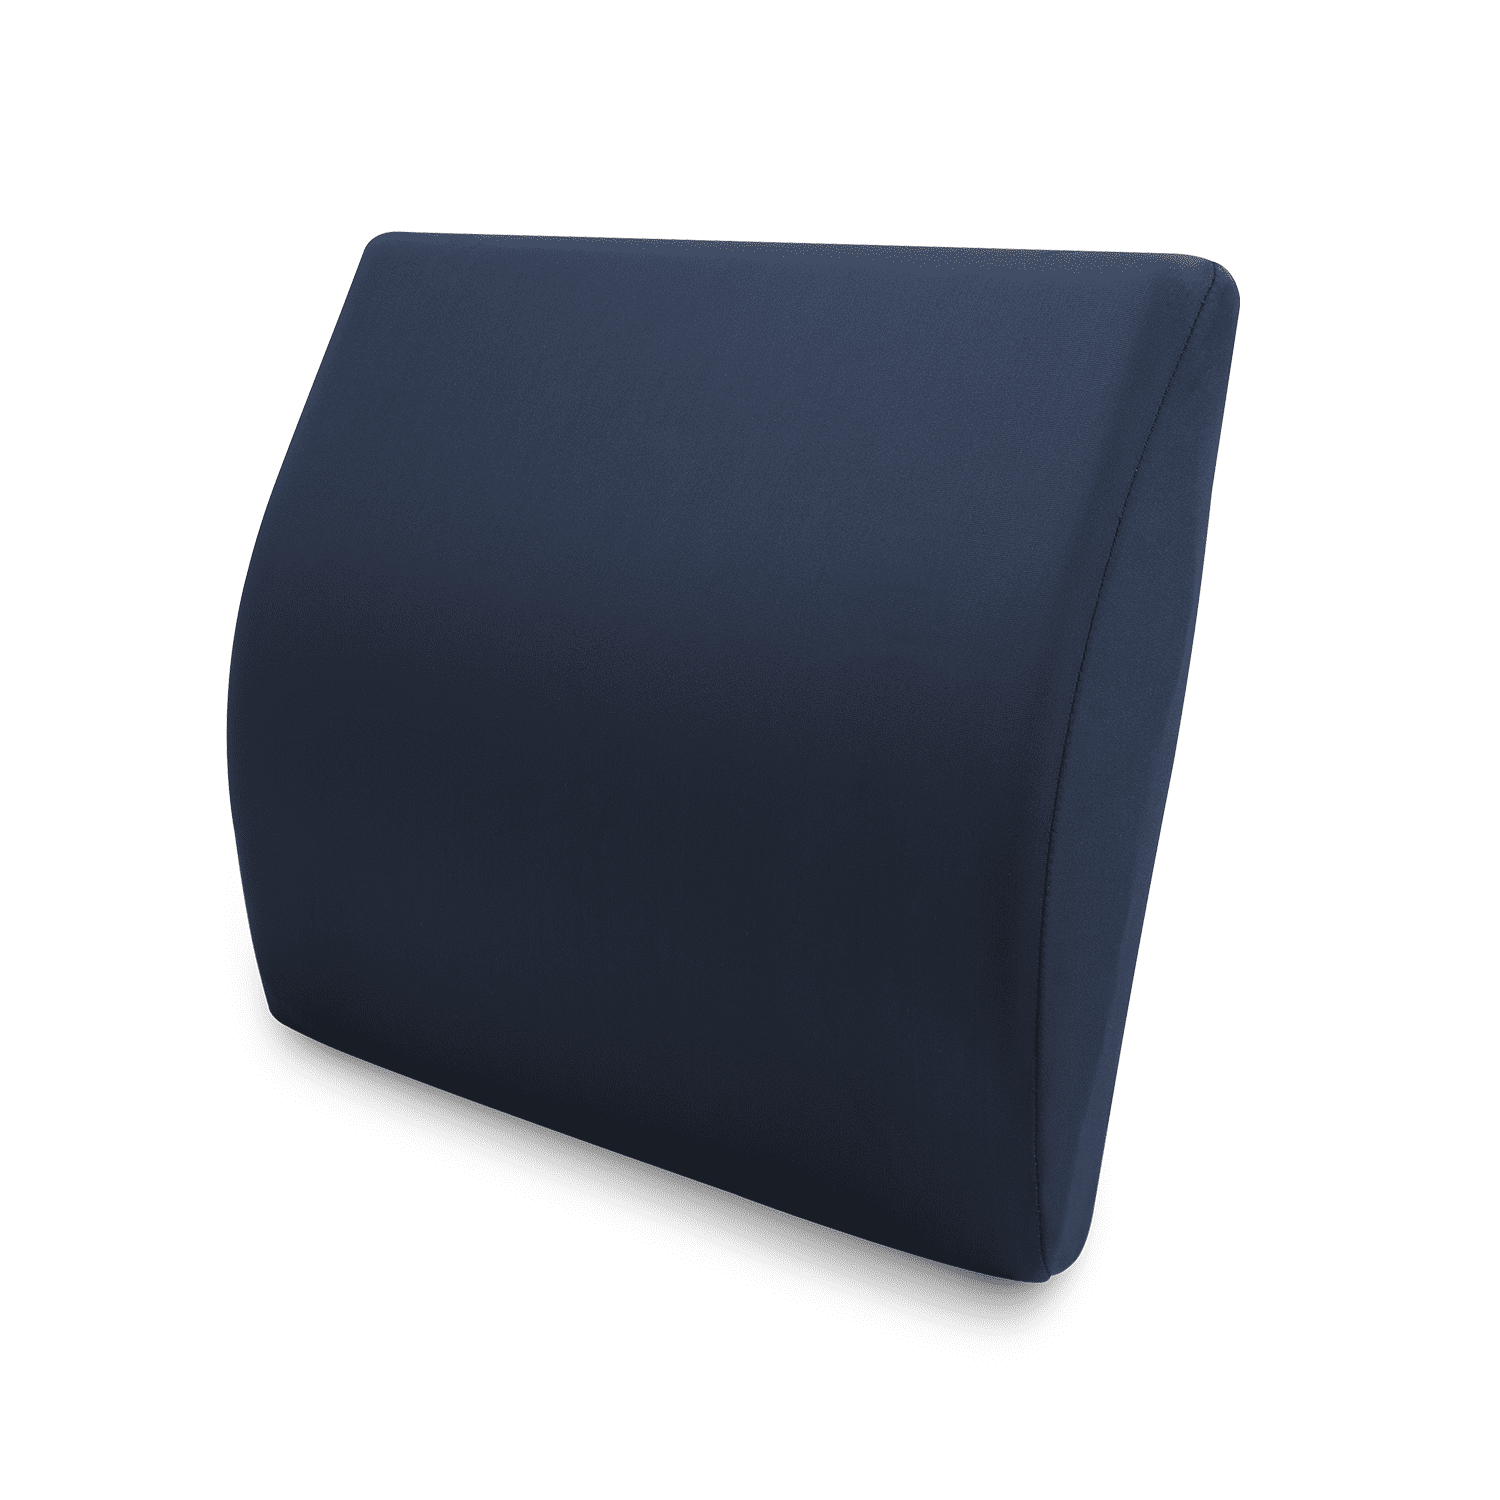 Tempur-Pedic Lumbar Support Cushion, Navy Blue, One Size